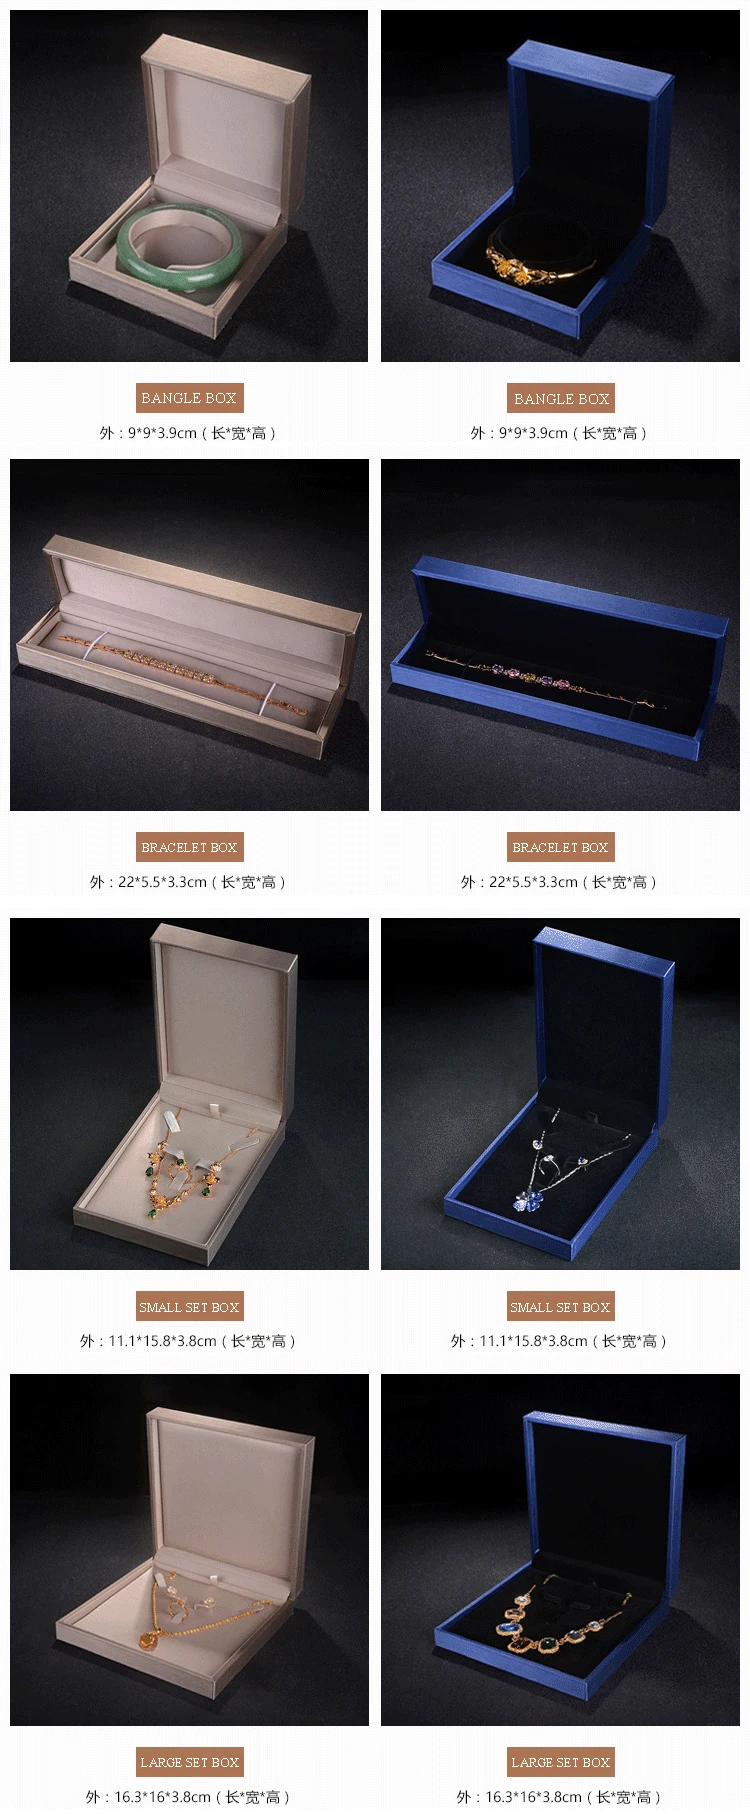 5 Plastic Jewelry Box.jpg